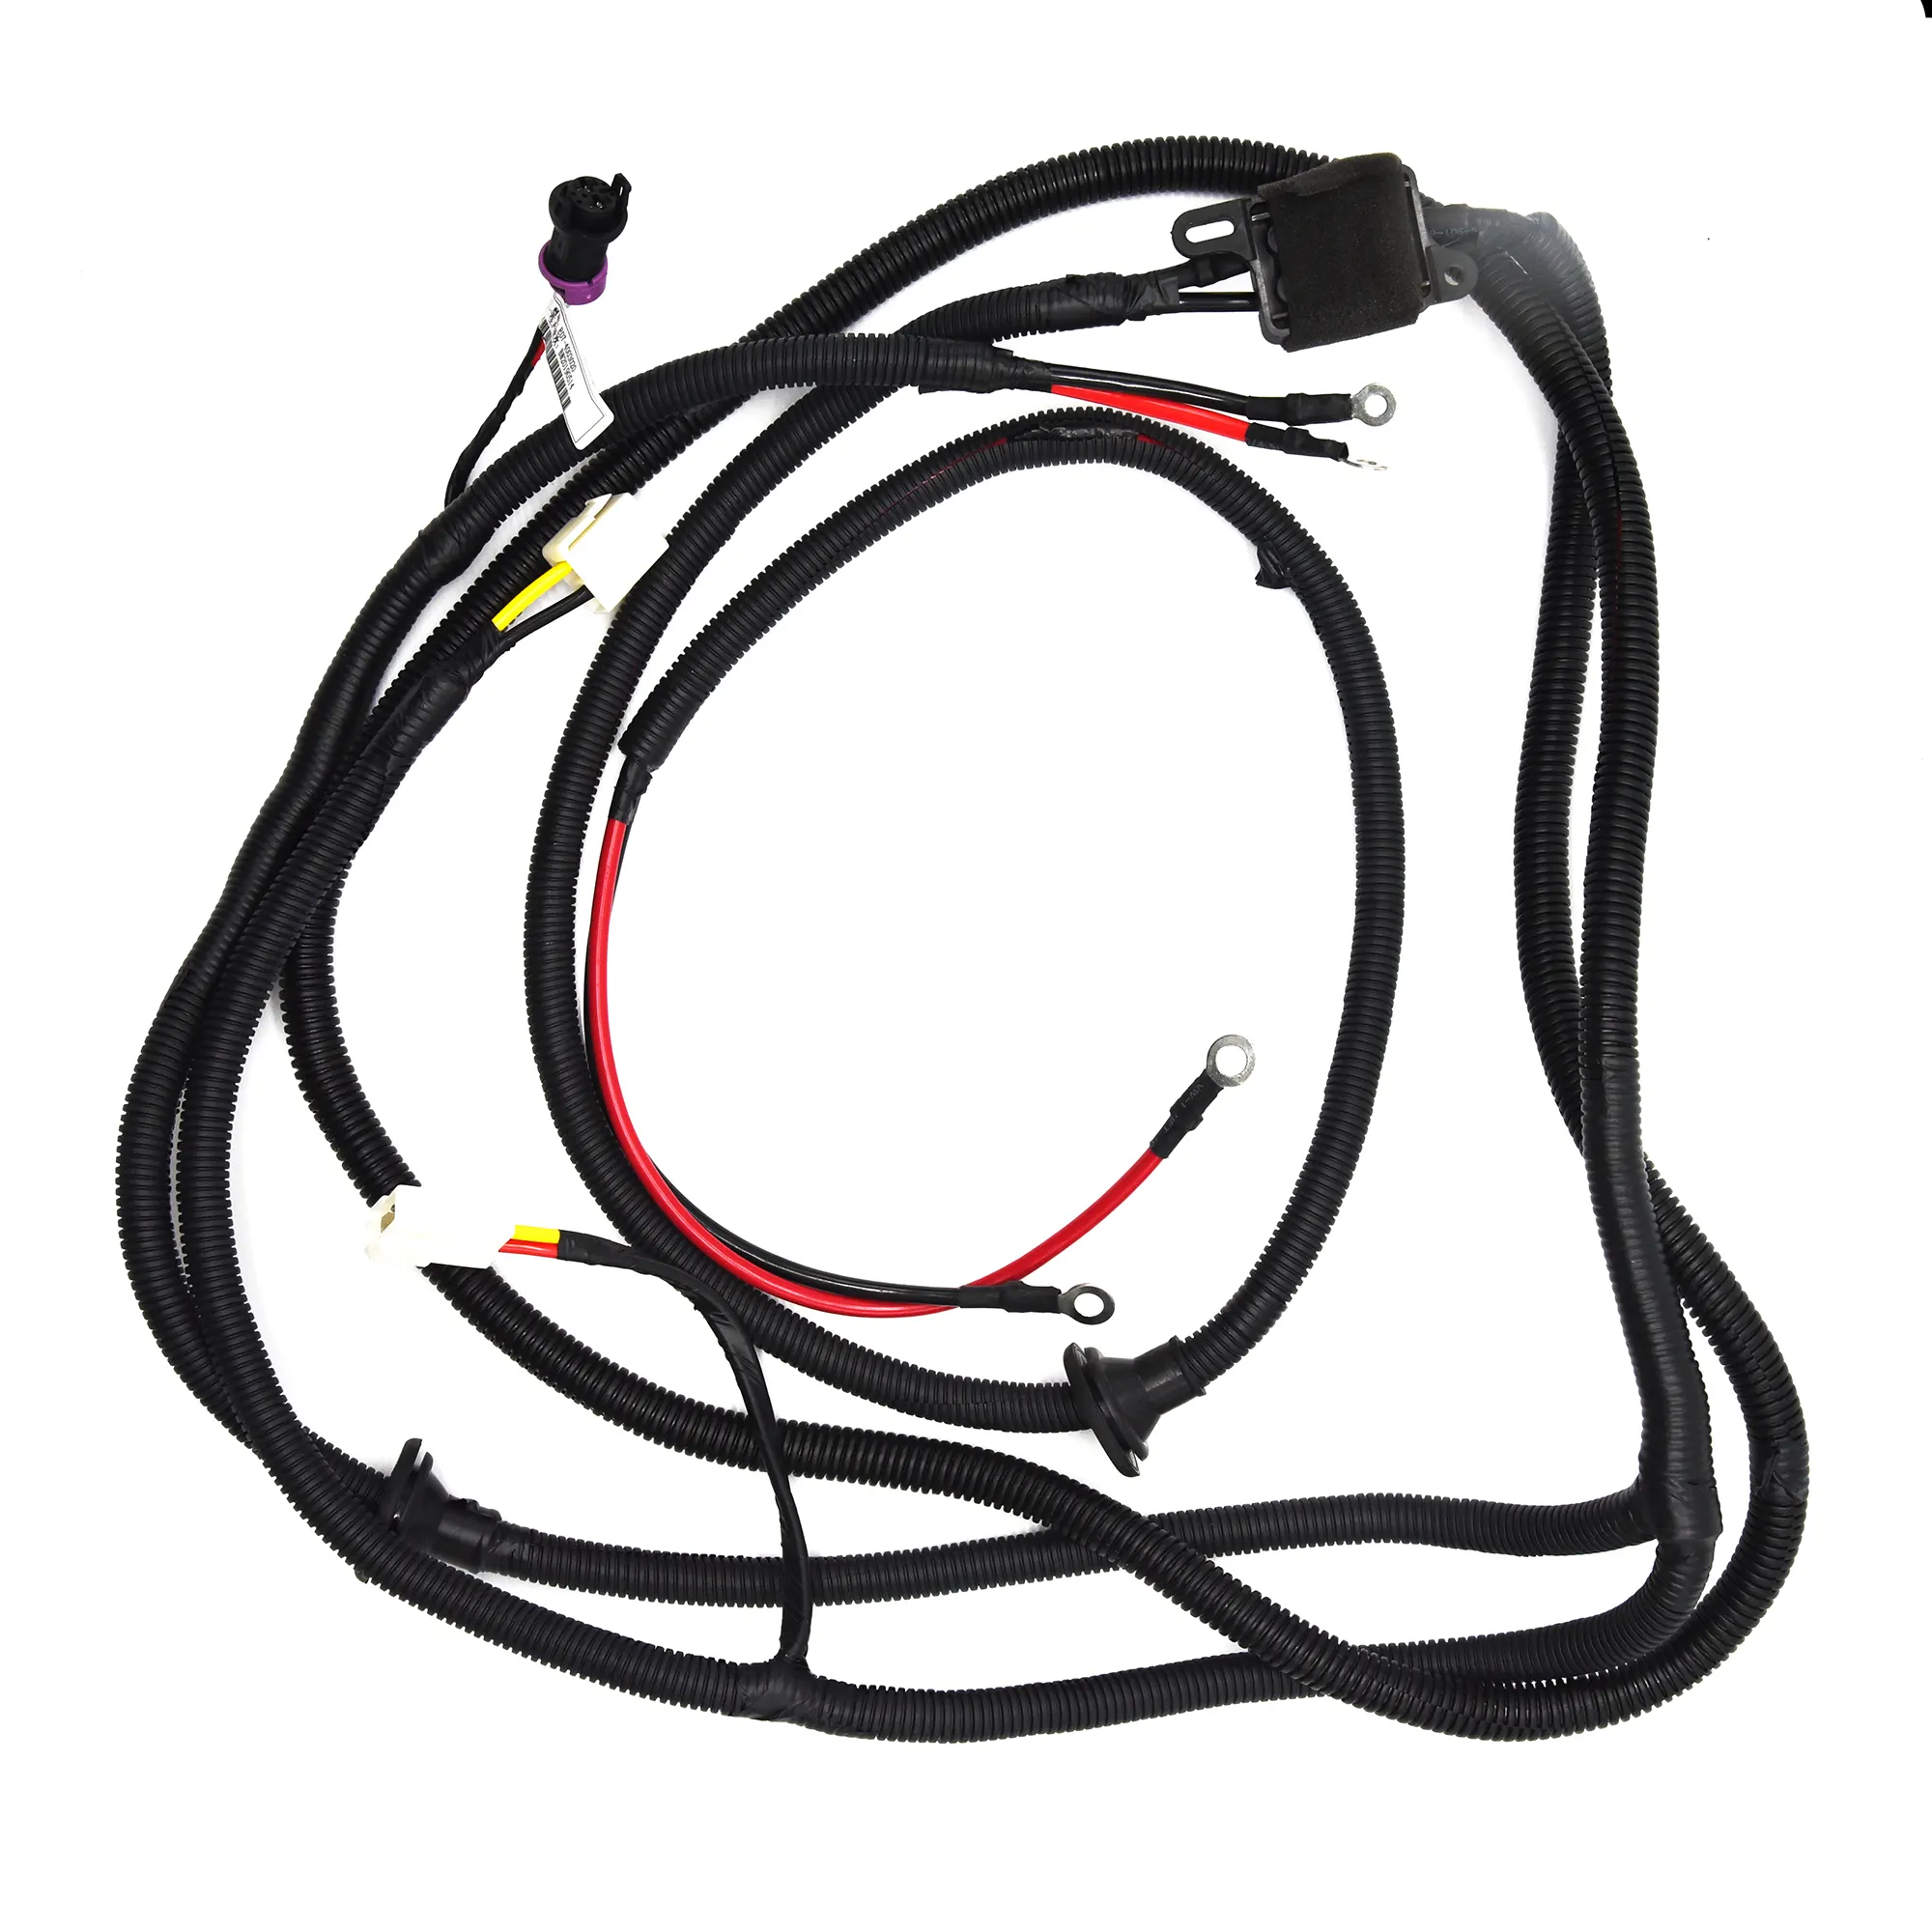 Harnes kabel motor elektrik otomotif kustom rakitan kabel lengkap kabel harness energi baru